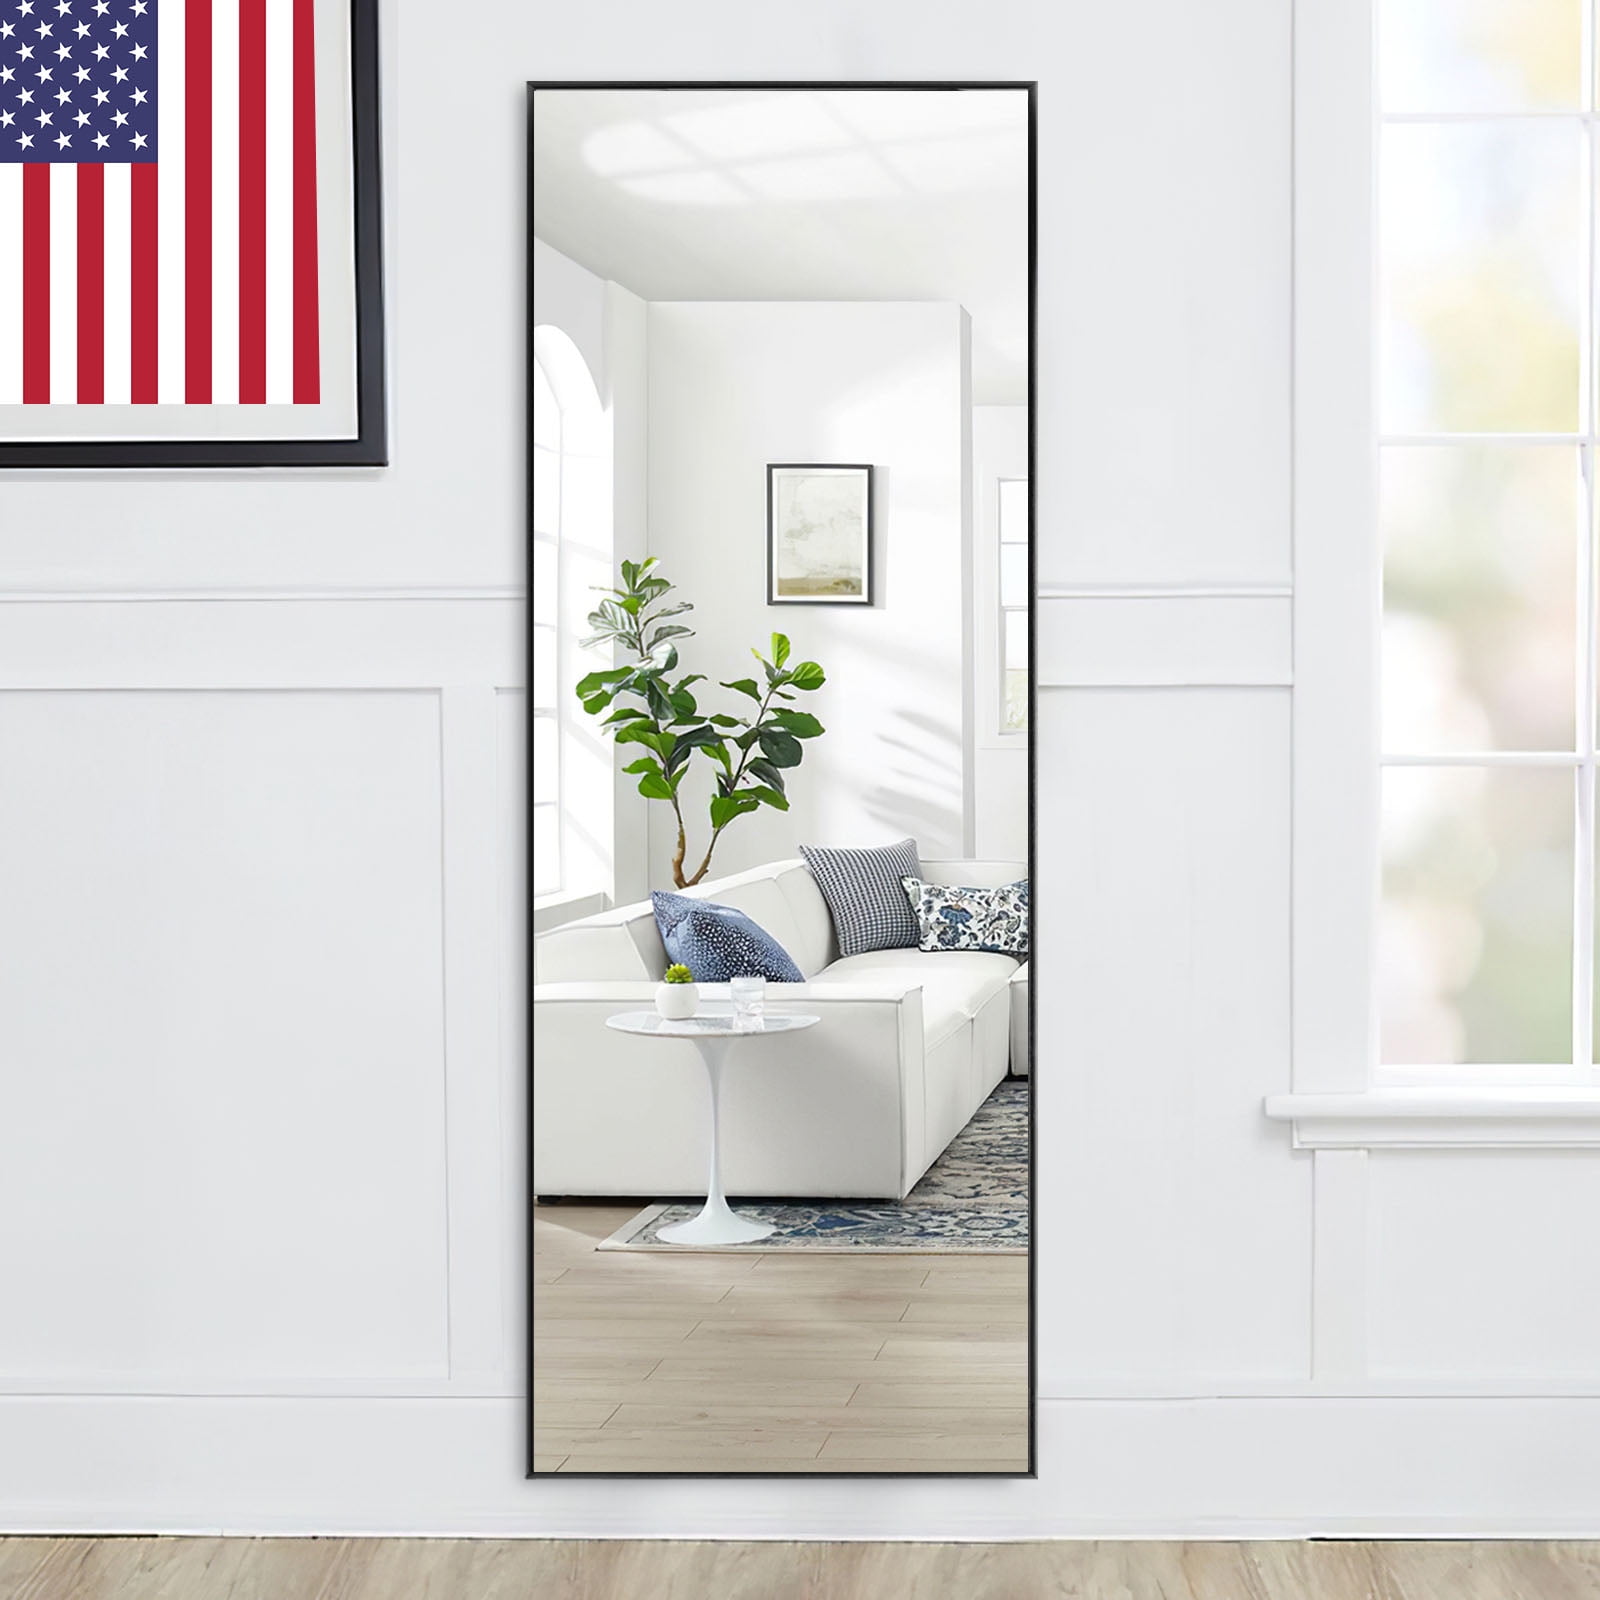 Neutype Full Length Mirror Decor Wall, Full Length Mirror In Living Room Ideas